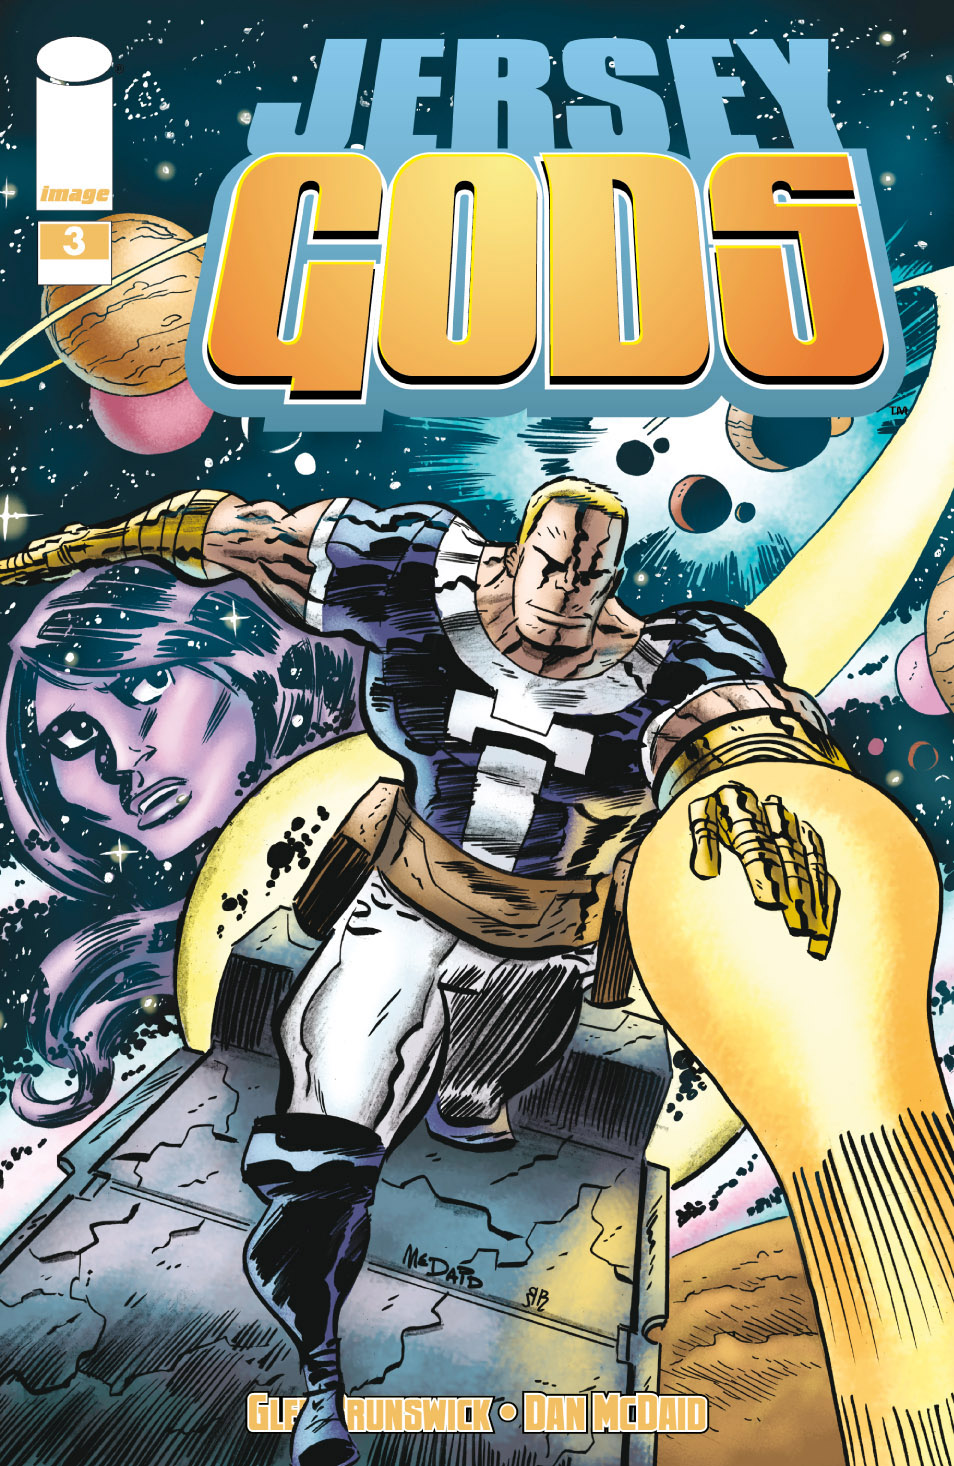 Read online Jersey Gods comic -  Issue #3 - 2